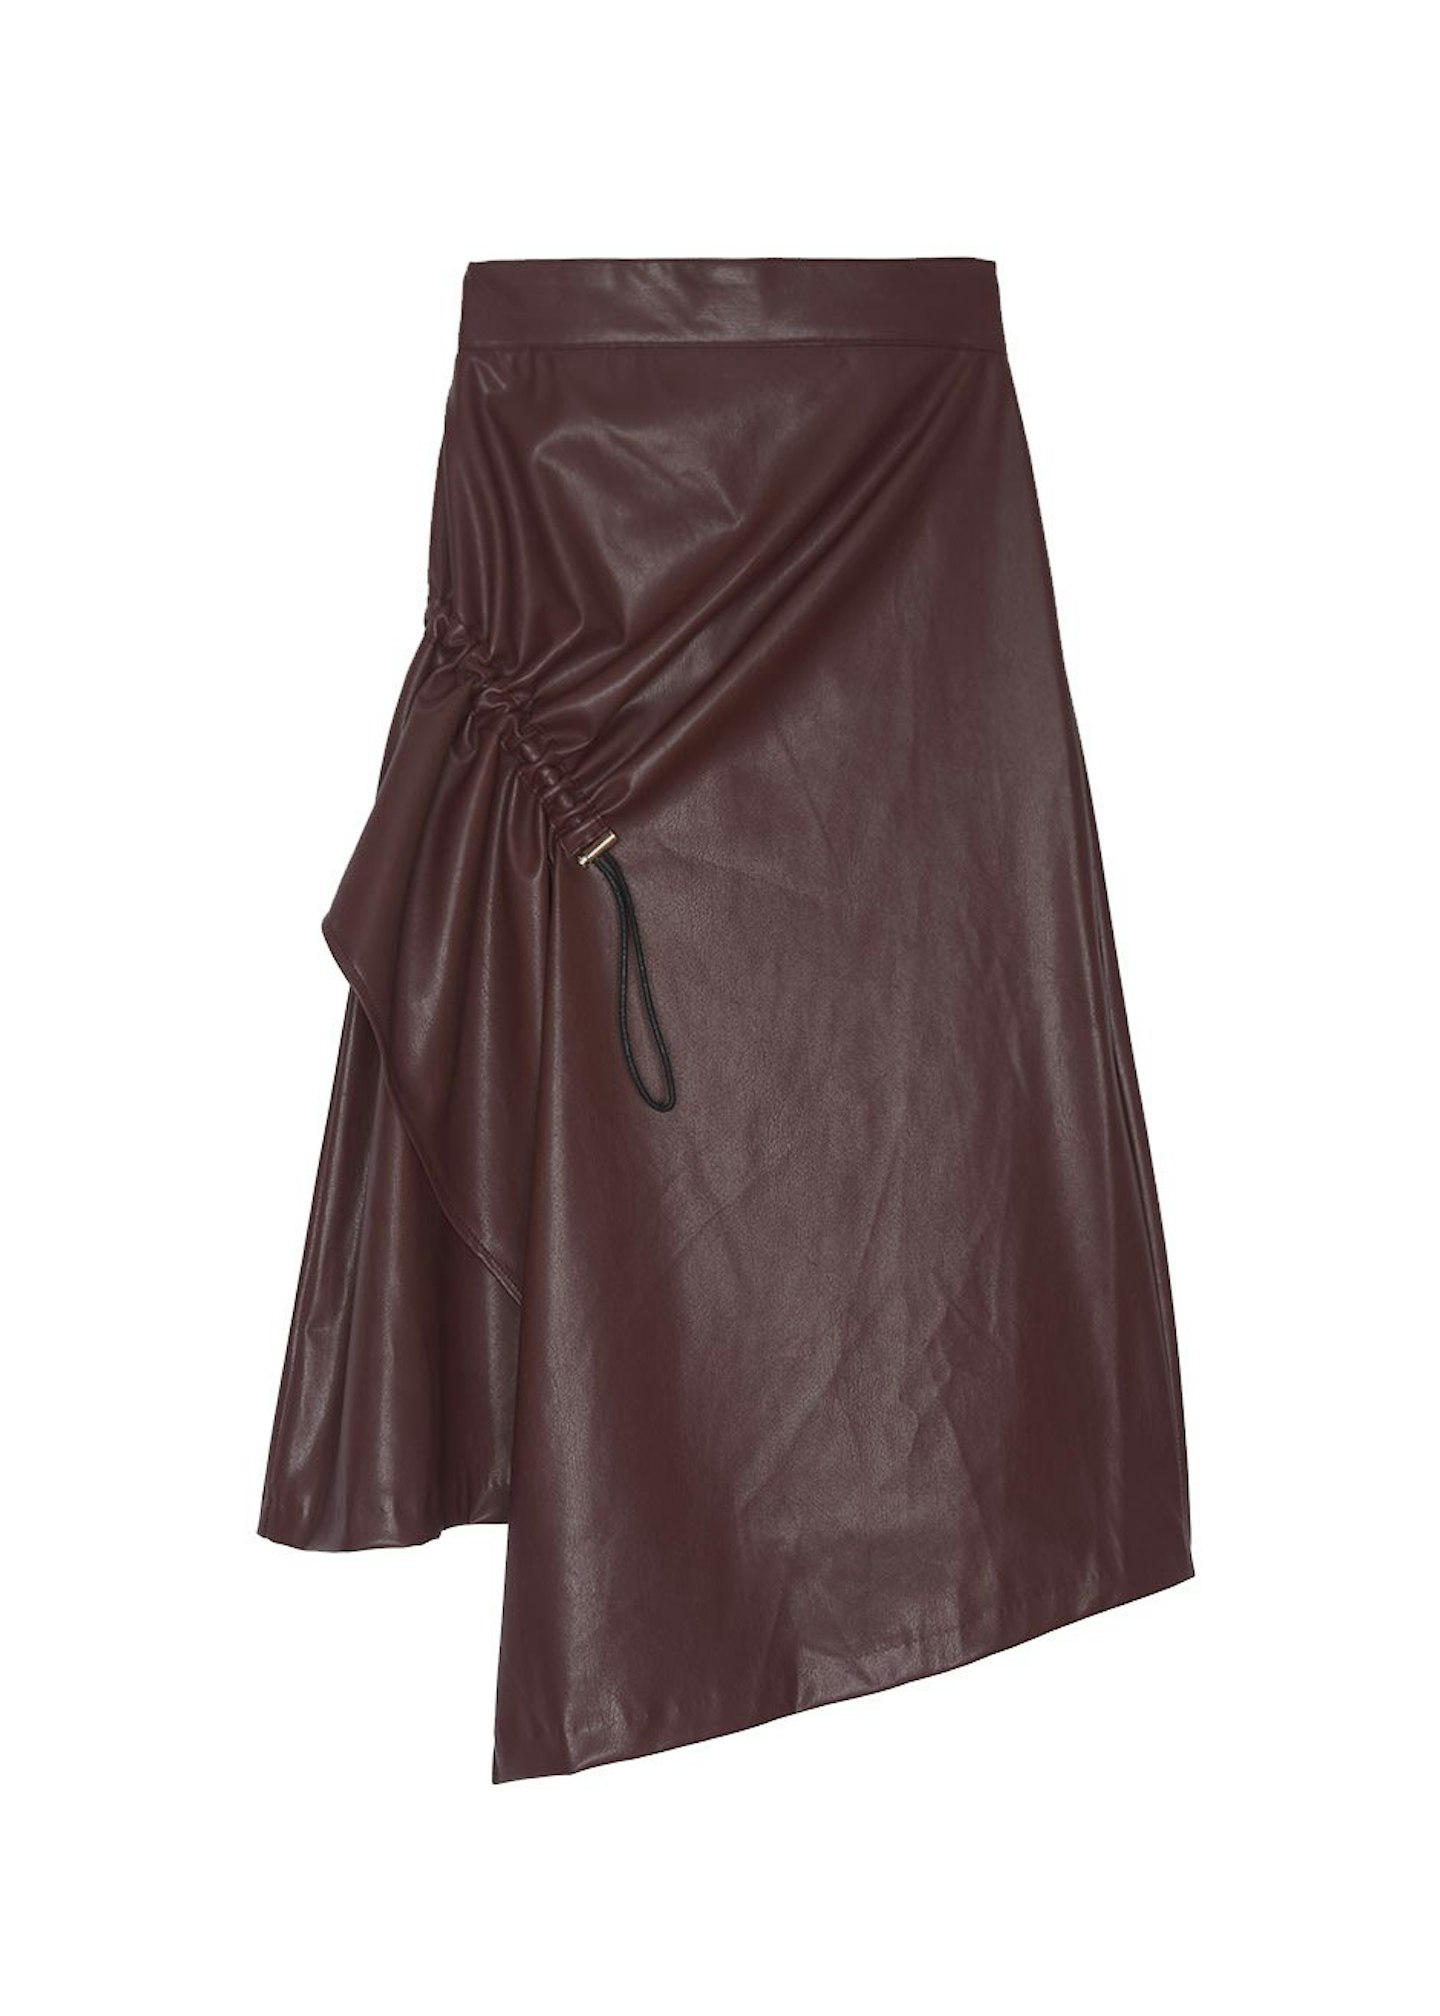 Frankie Shop, Faux Leather Skirt, £100.22